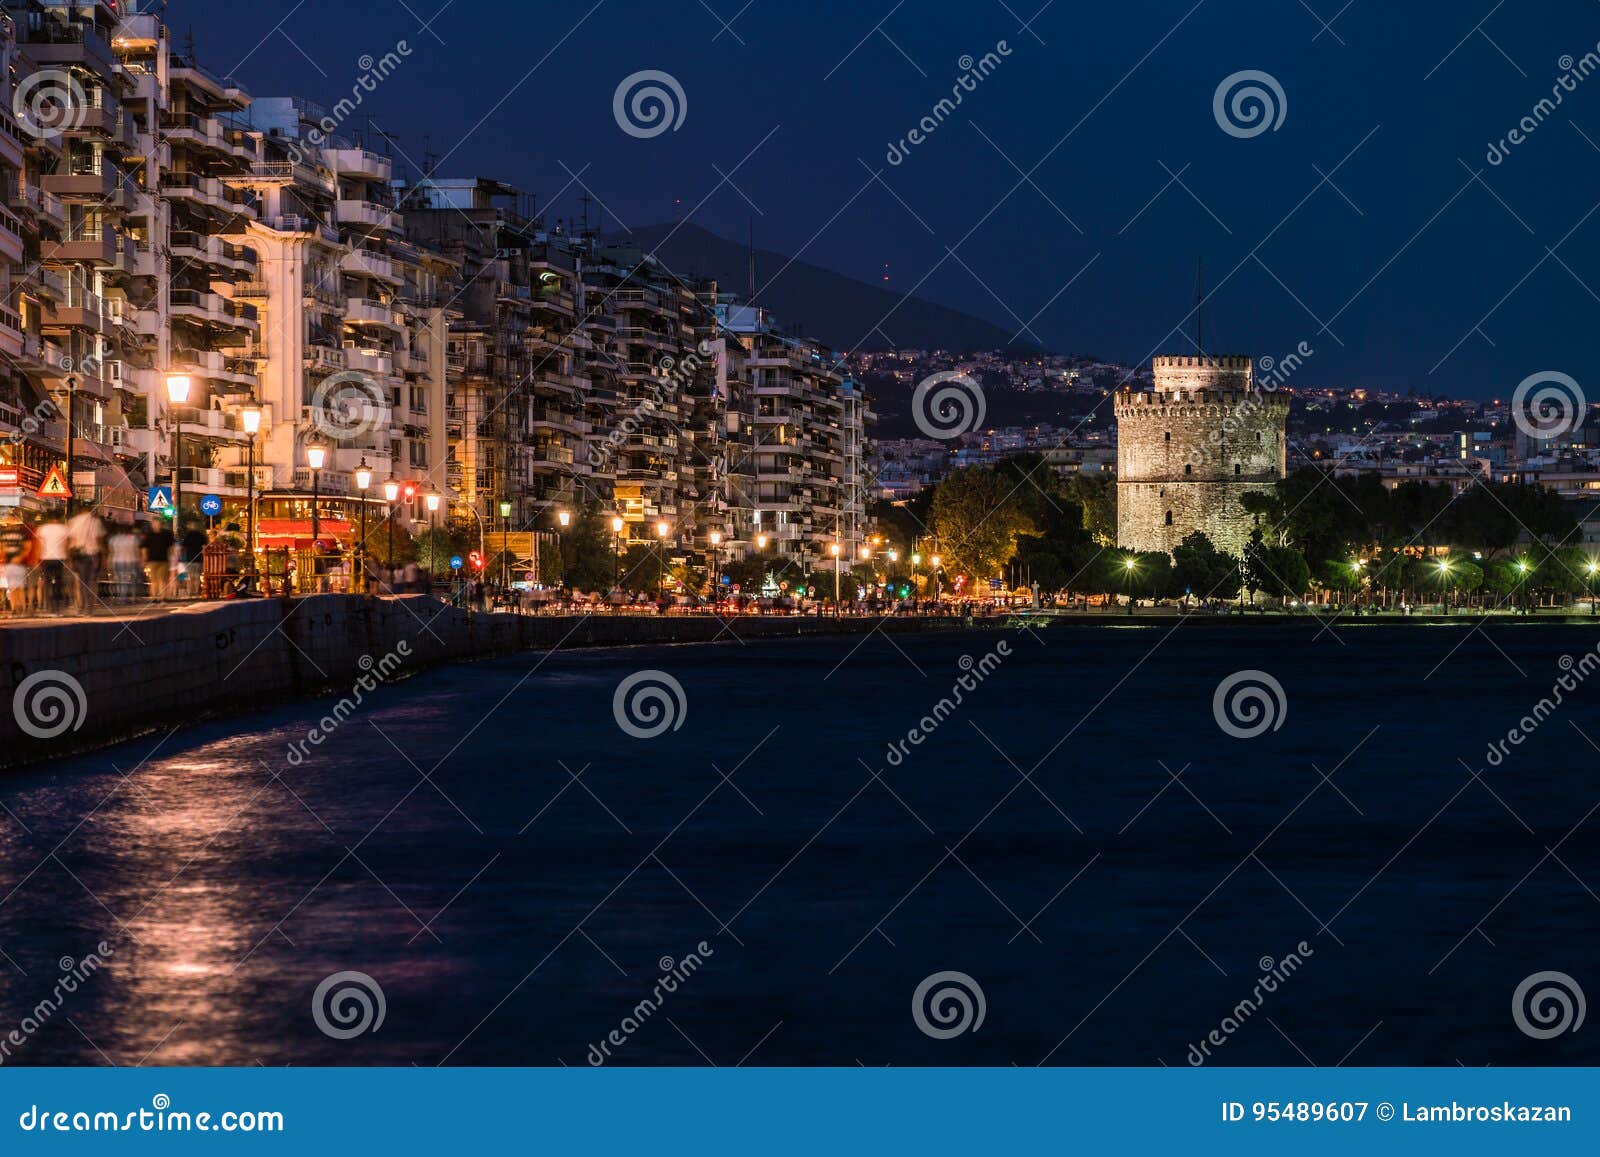 thessaloniki white tower by night